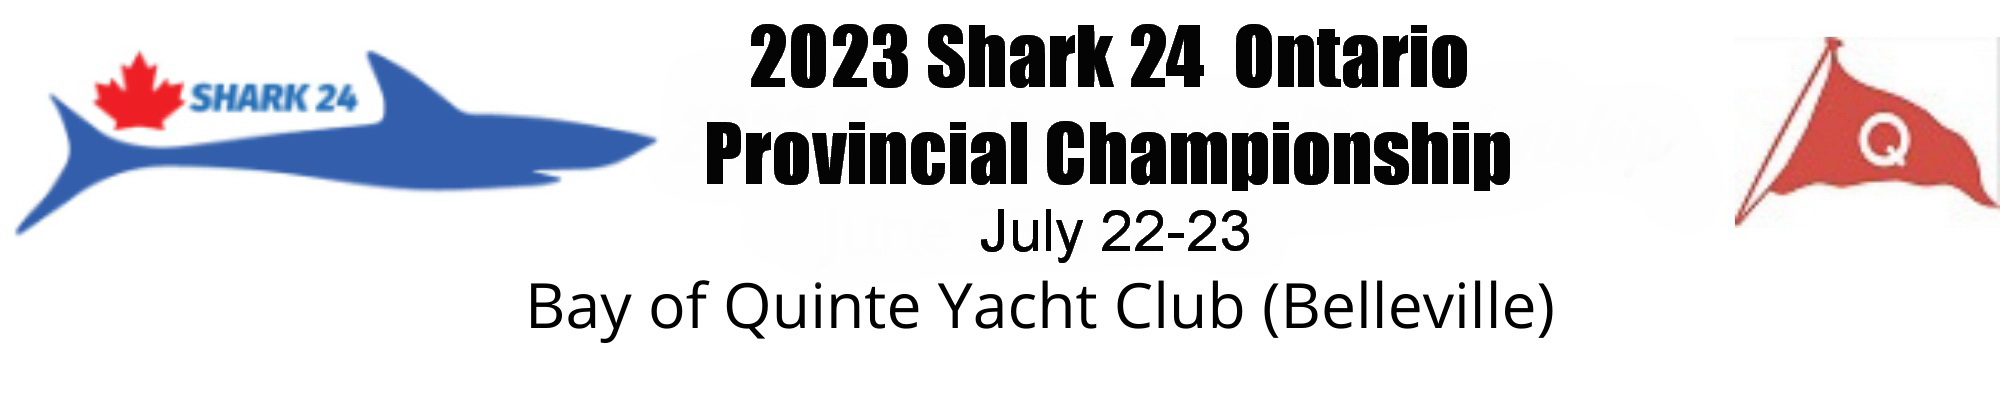 Canadian Shark Championship